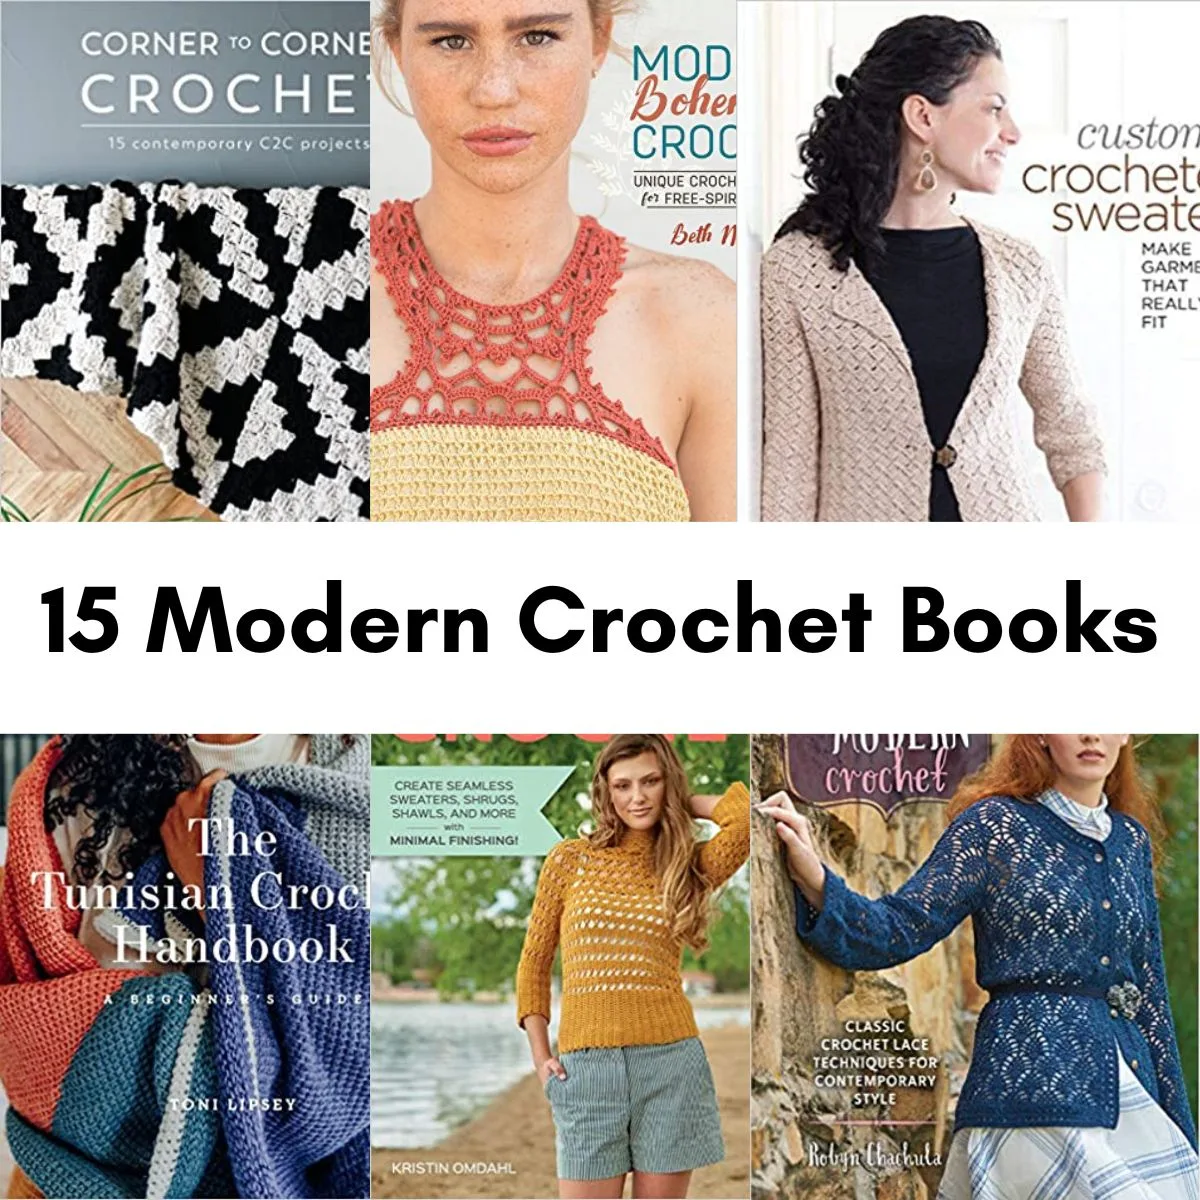 15 Modern Crochet Books.